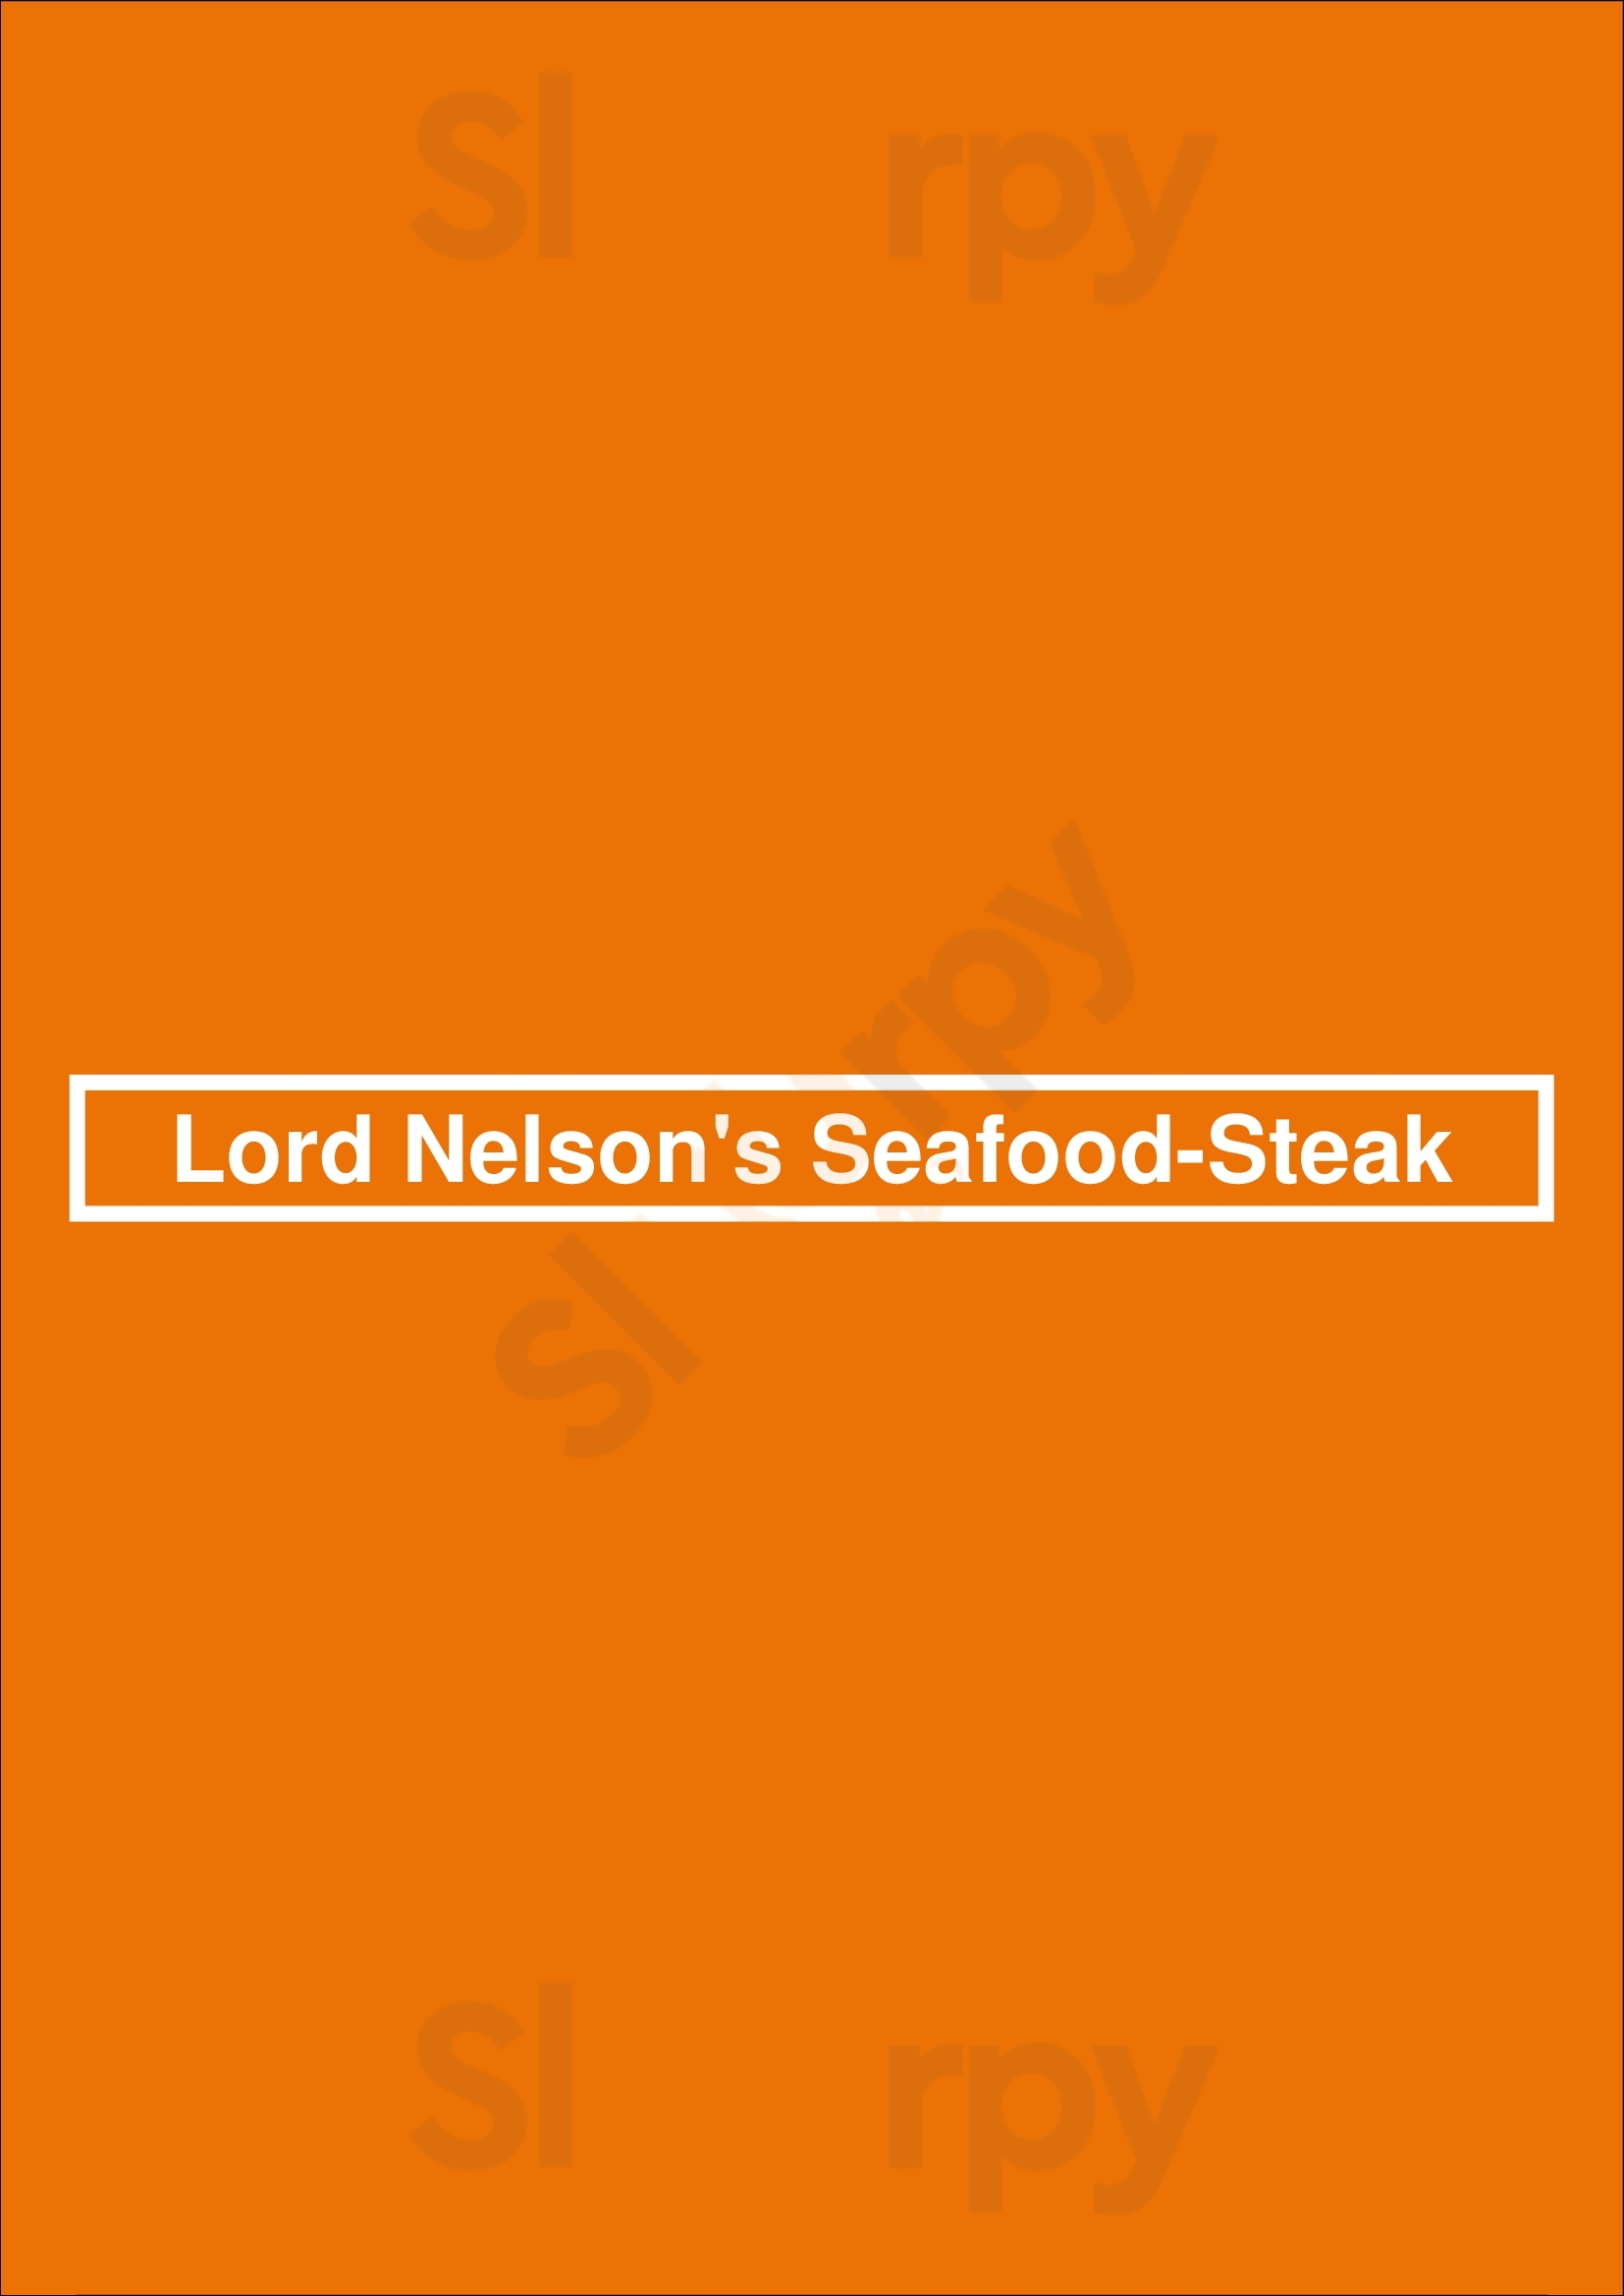 Lord Nelson's Seafood-steak Burlington Menu - 1